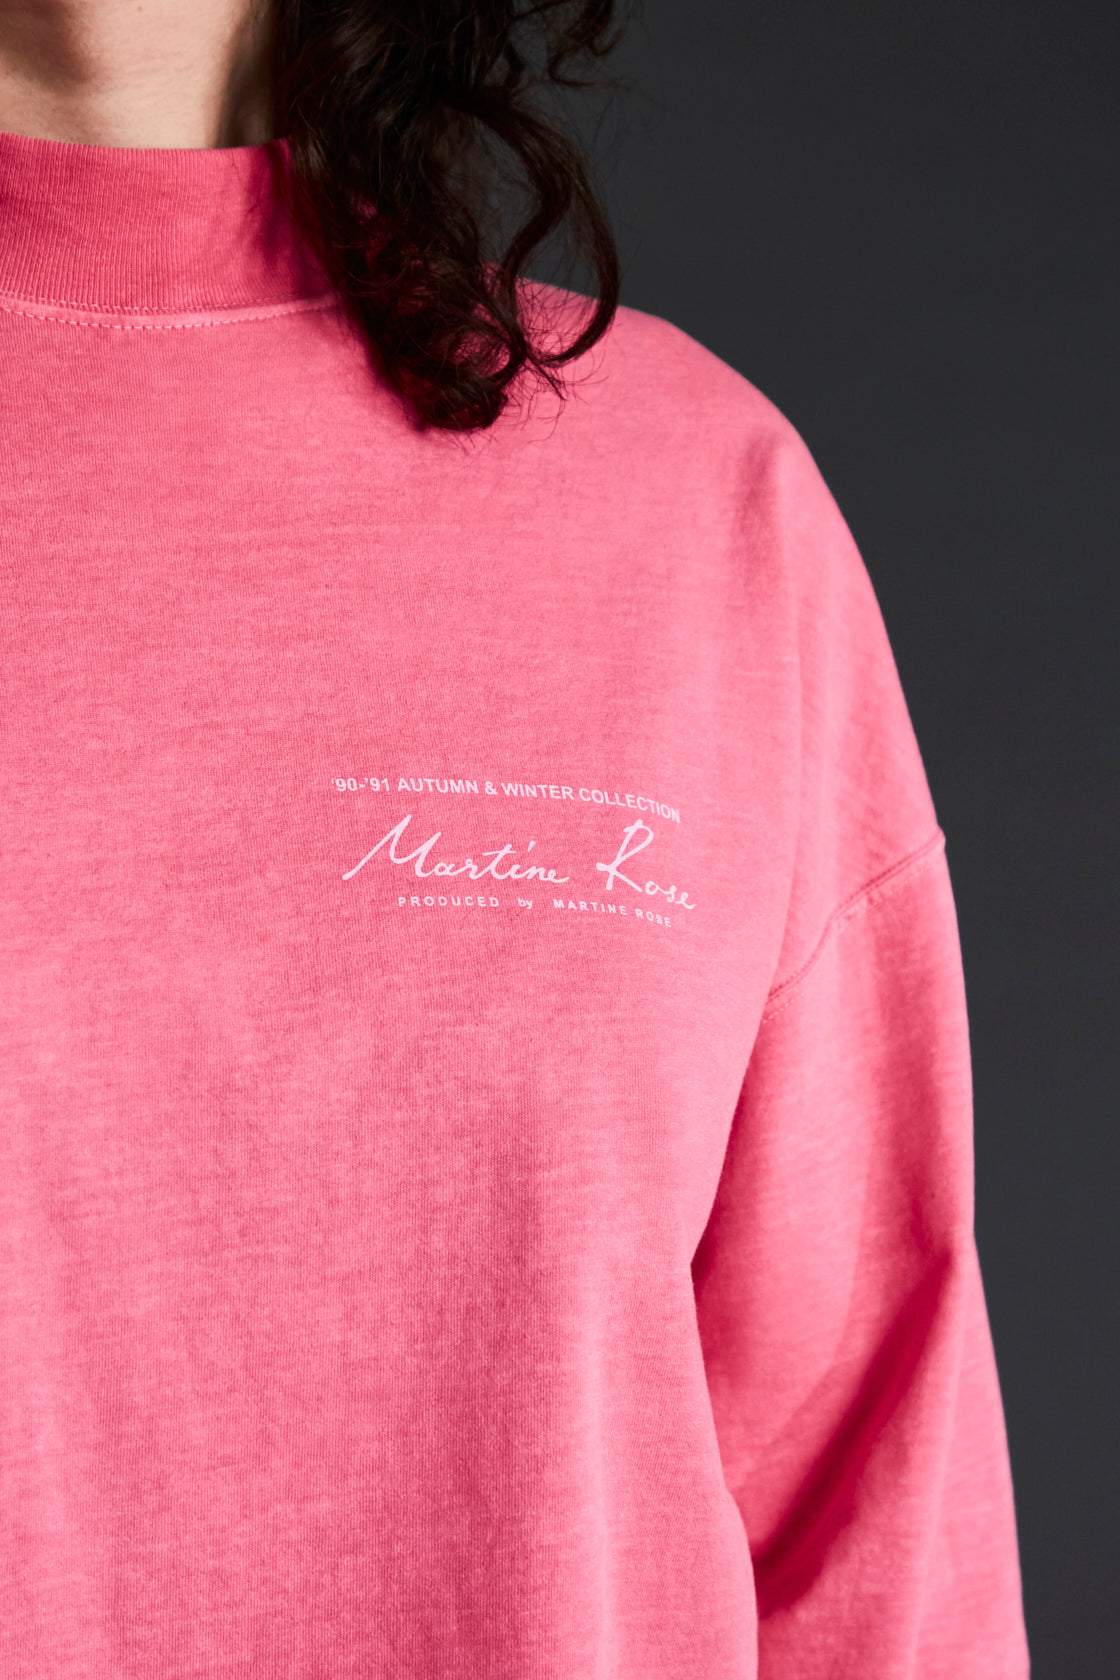 Martine Rose - Men's Pulled Neck T-Shirt - (Red)